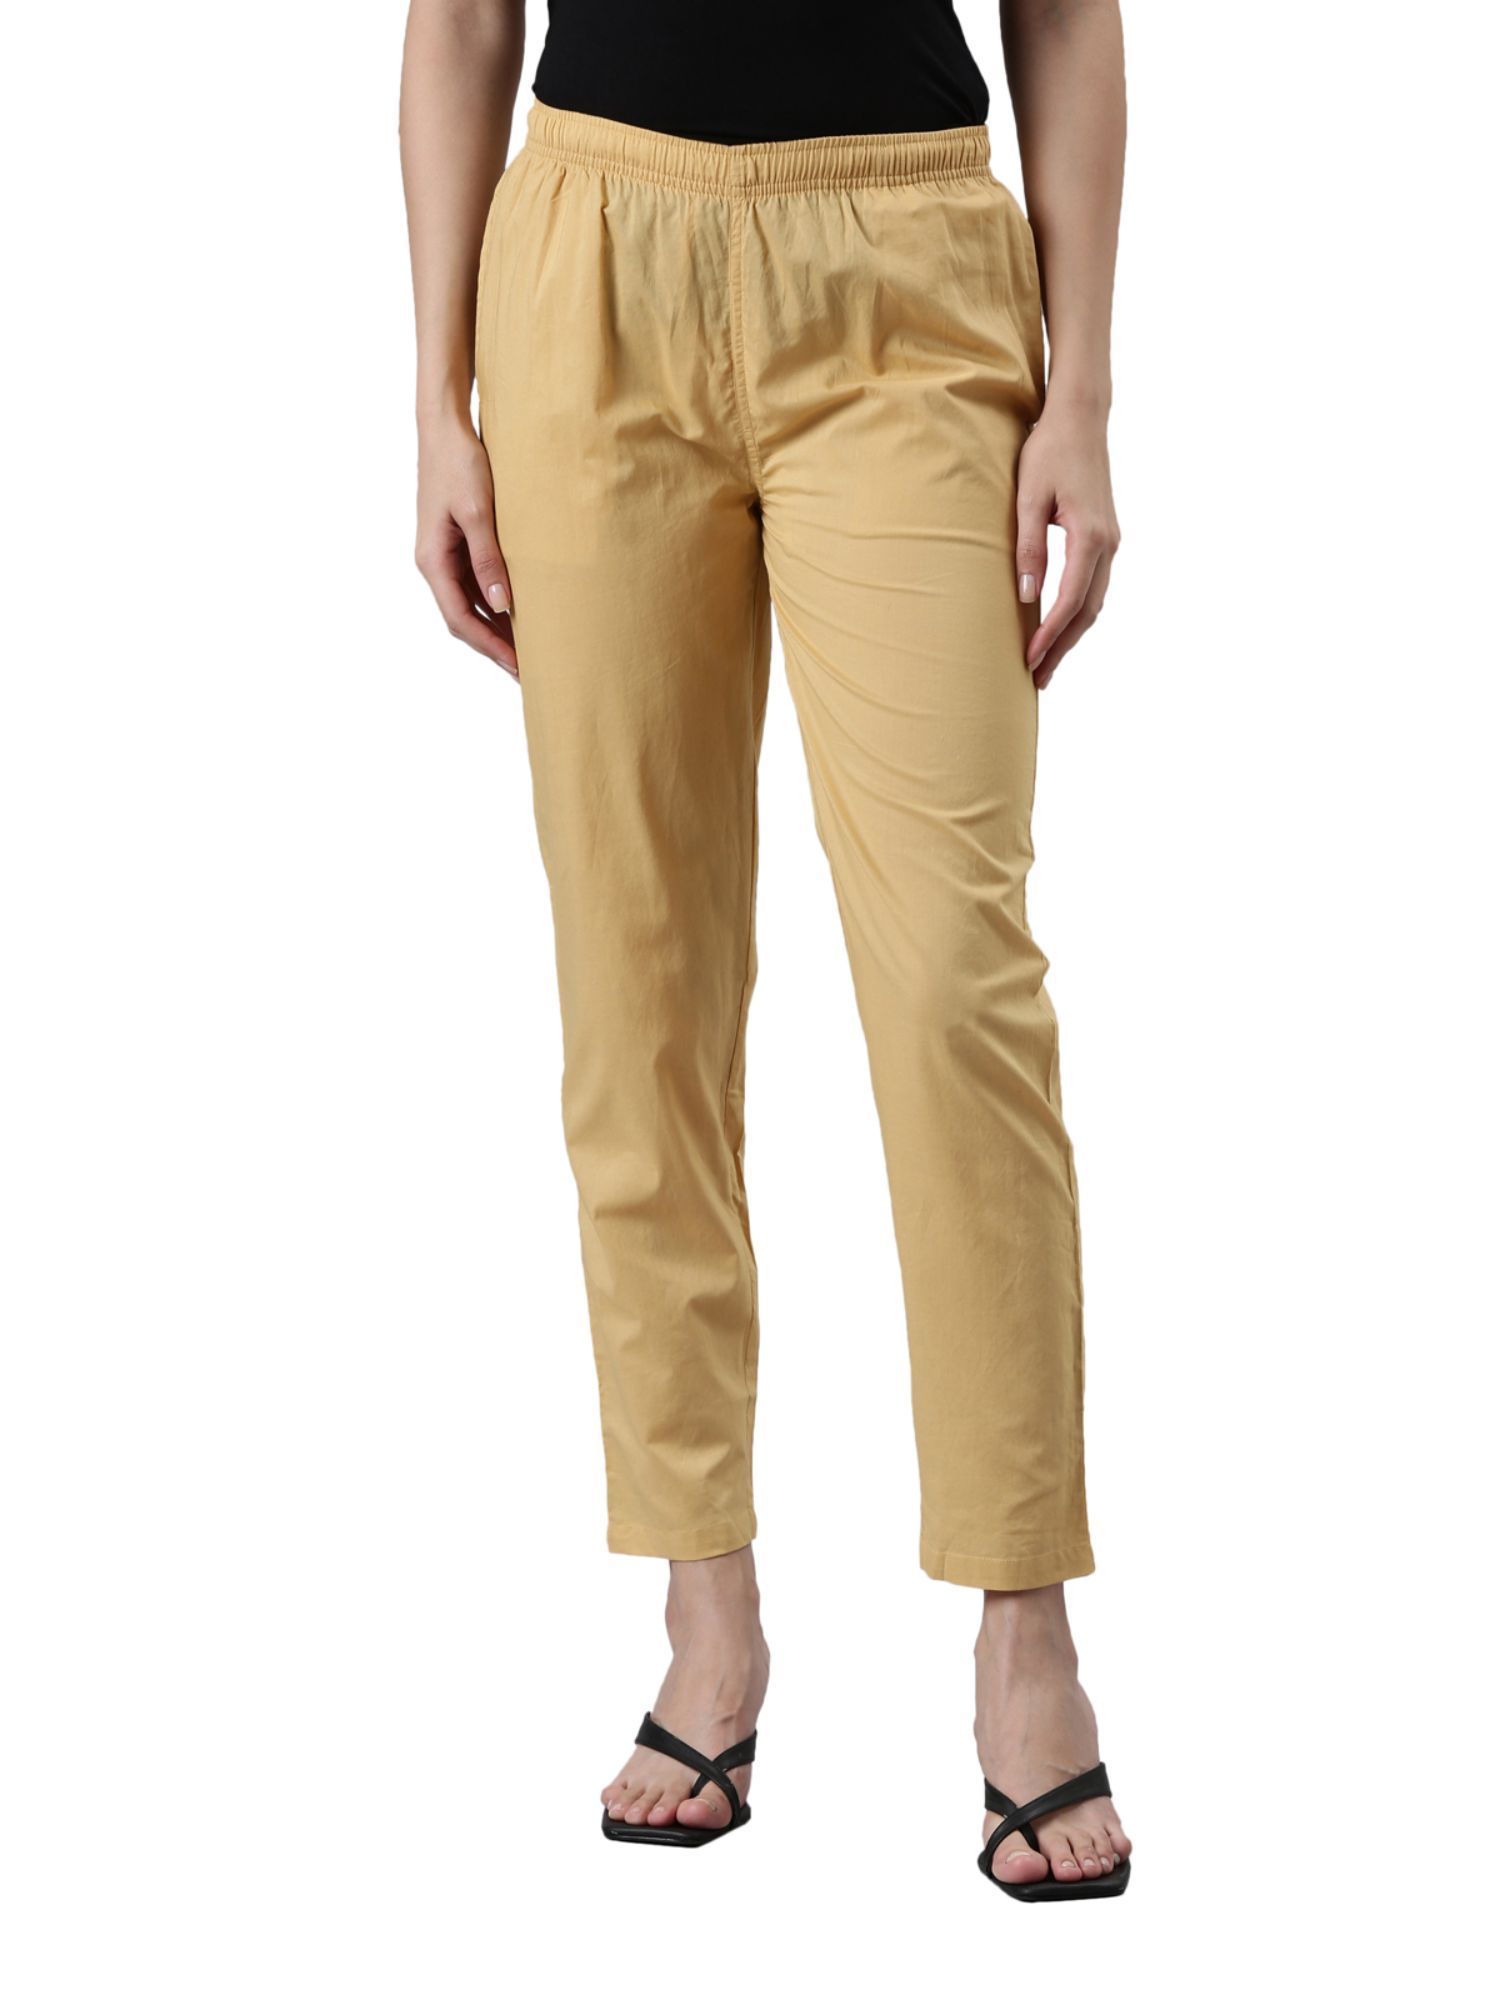 Buy NICE WONDER Slik Pants/Trousers for Ledies & Girls (L,XL,2XL,3L) (L,  Black) at Amazon.in